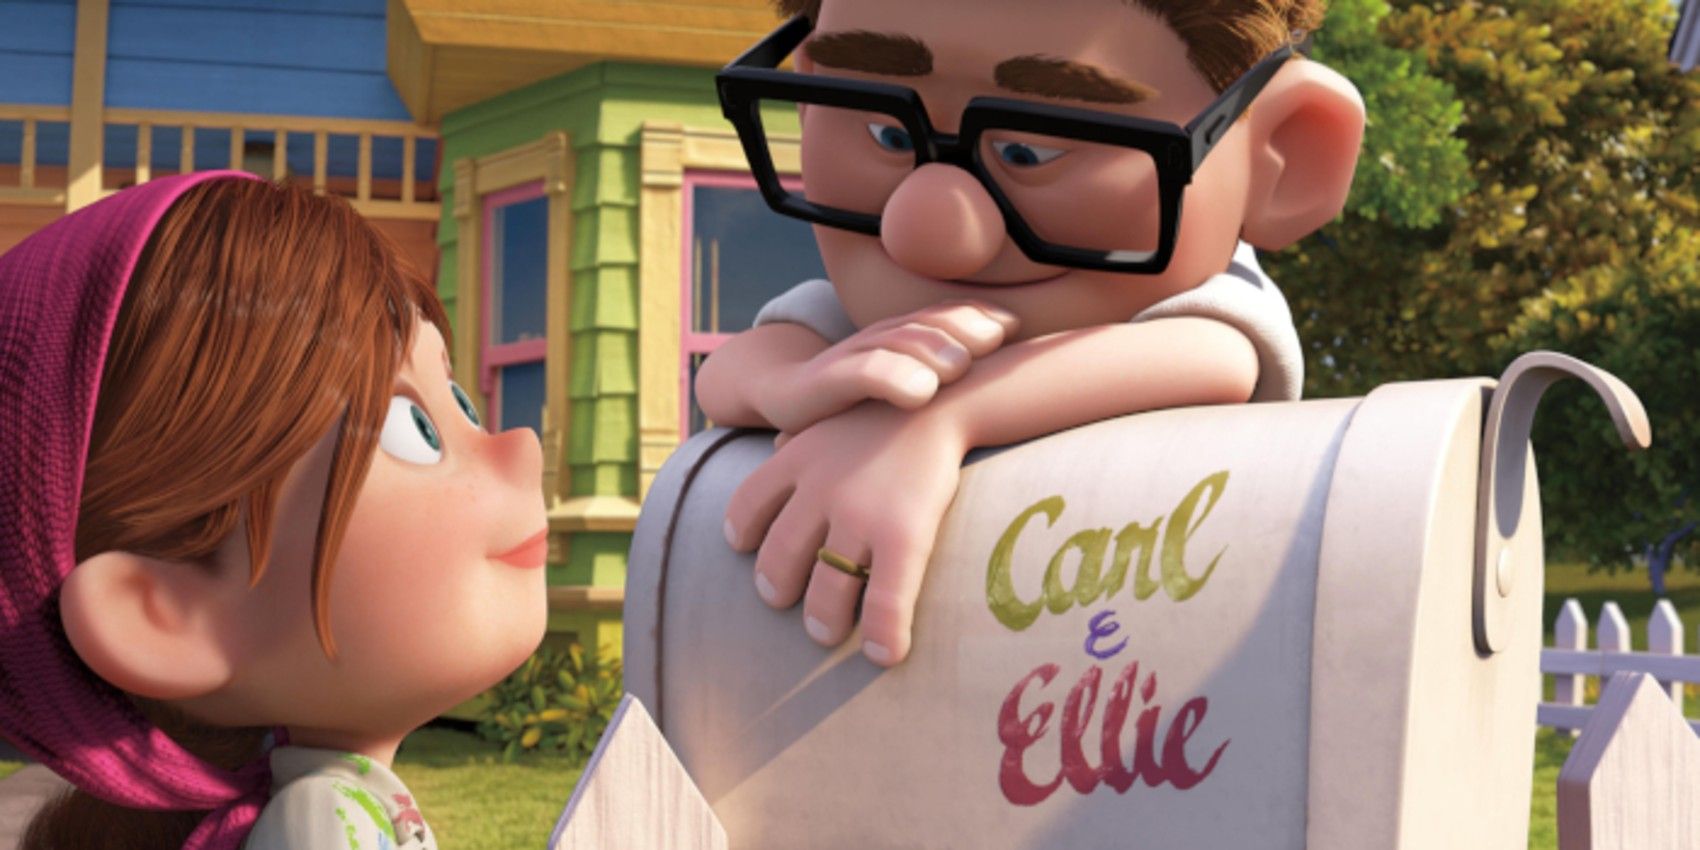 Carl and Ellie in Pixars Up